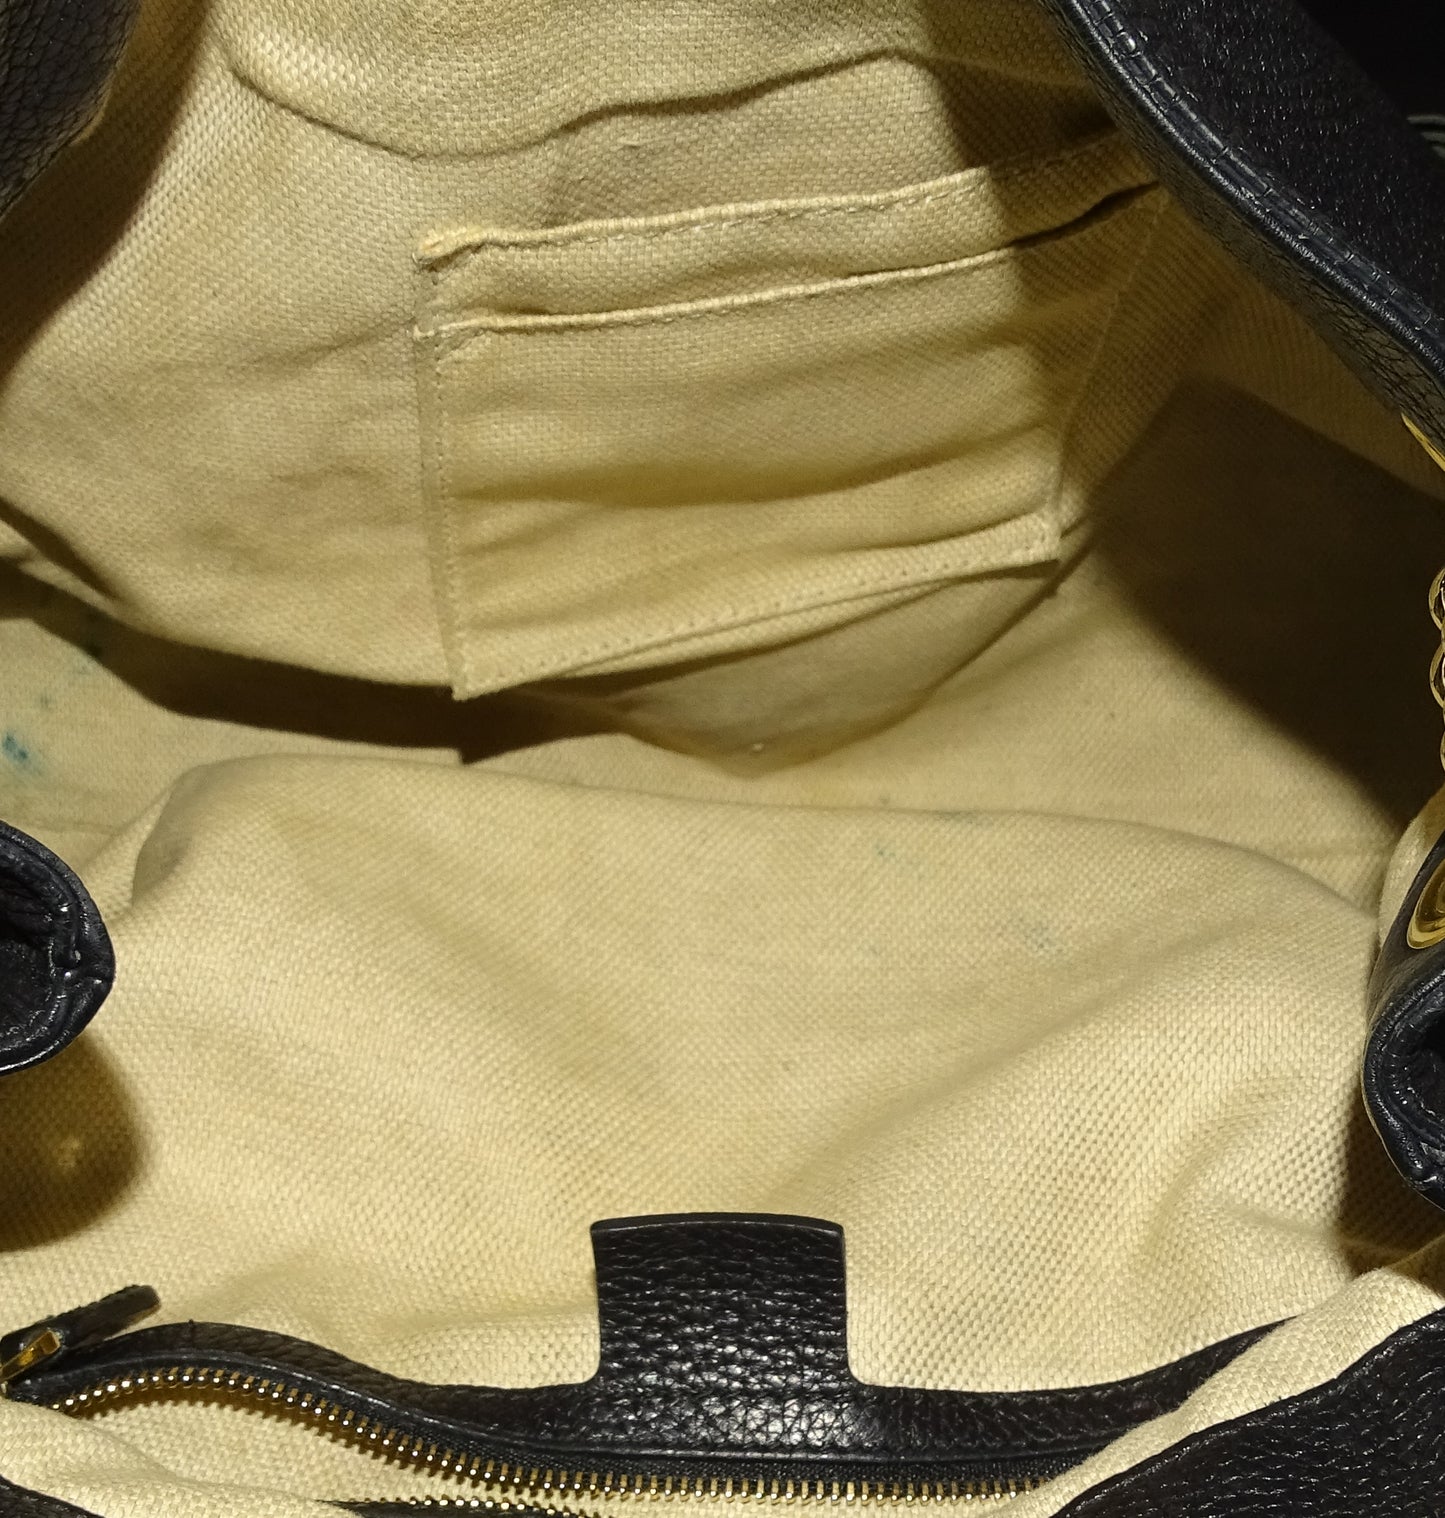 Gucci Black Leather Soho Chain Tote Bag